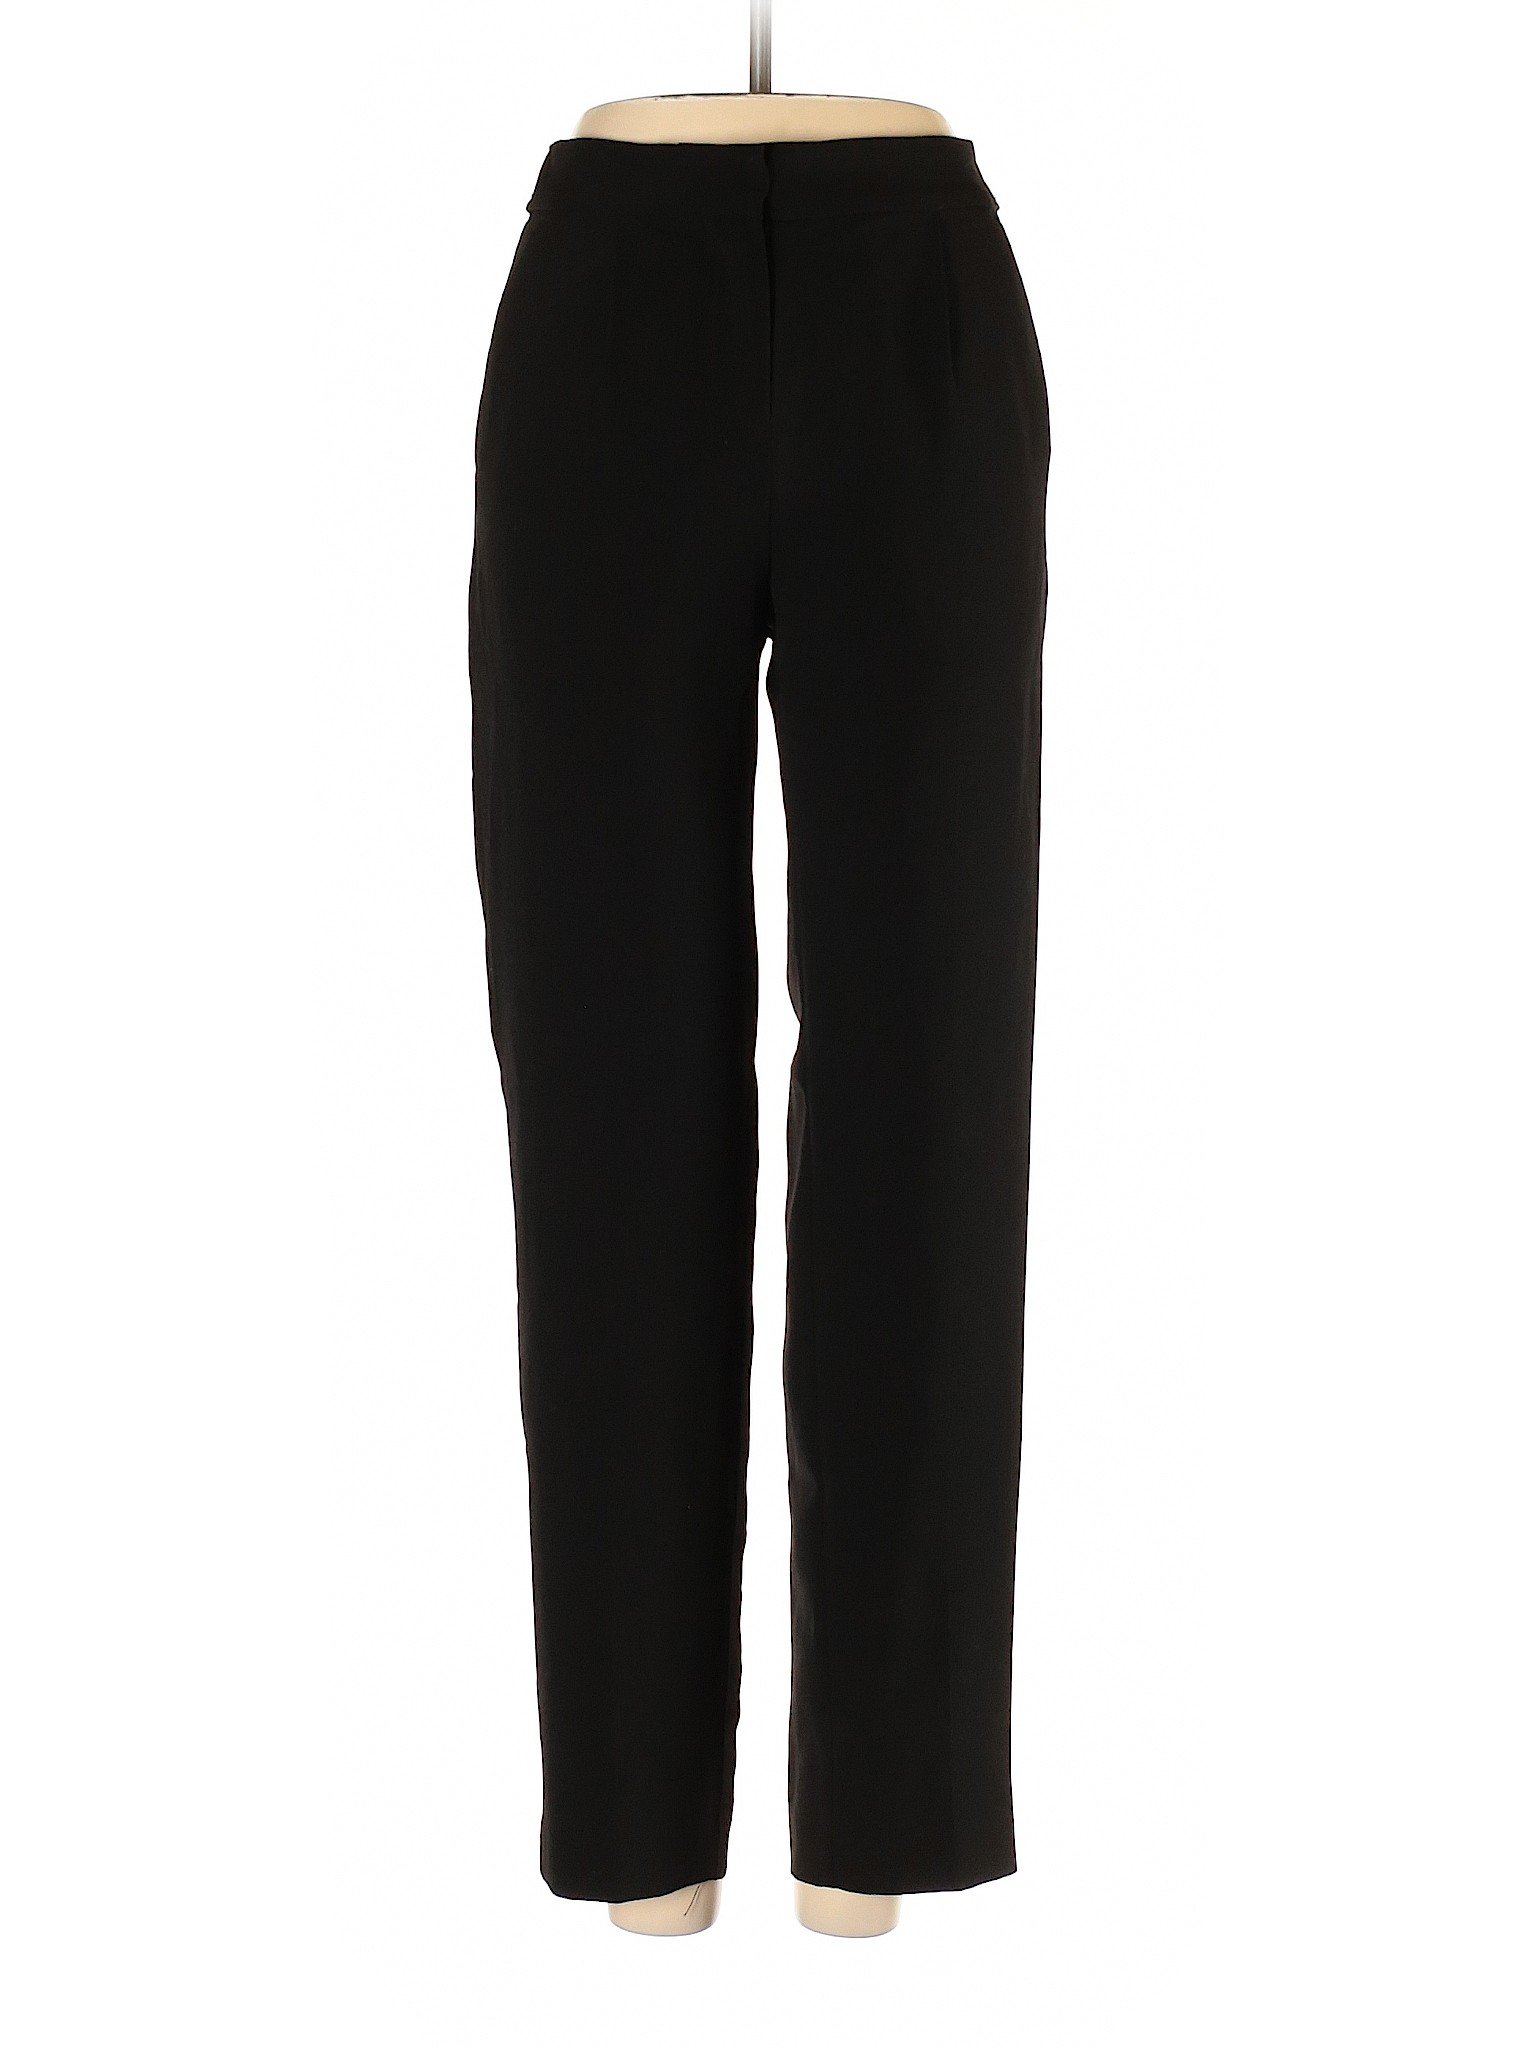 H&M Women Black Casual Pants 2 | eBay